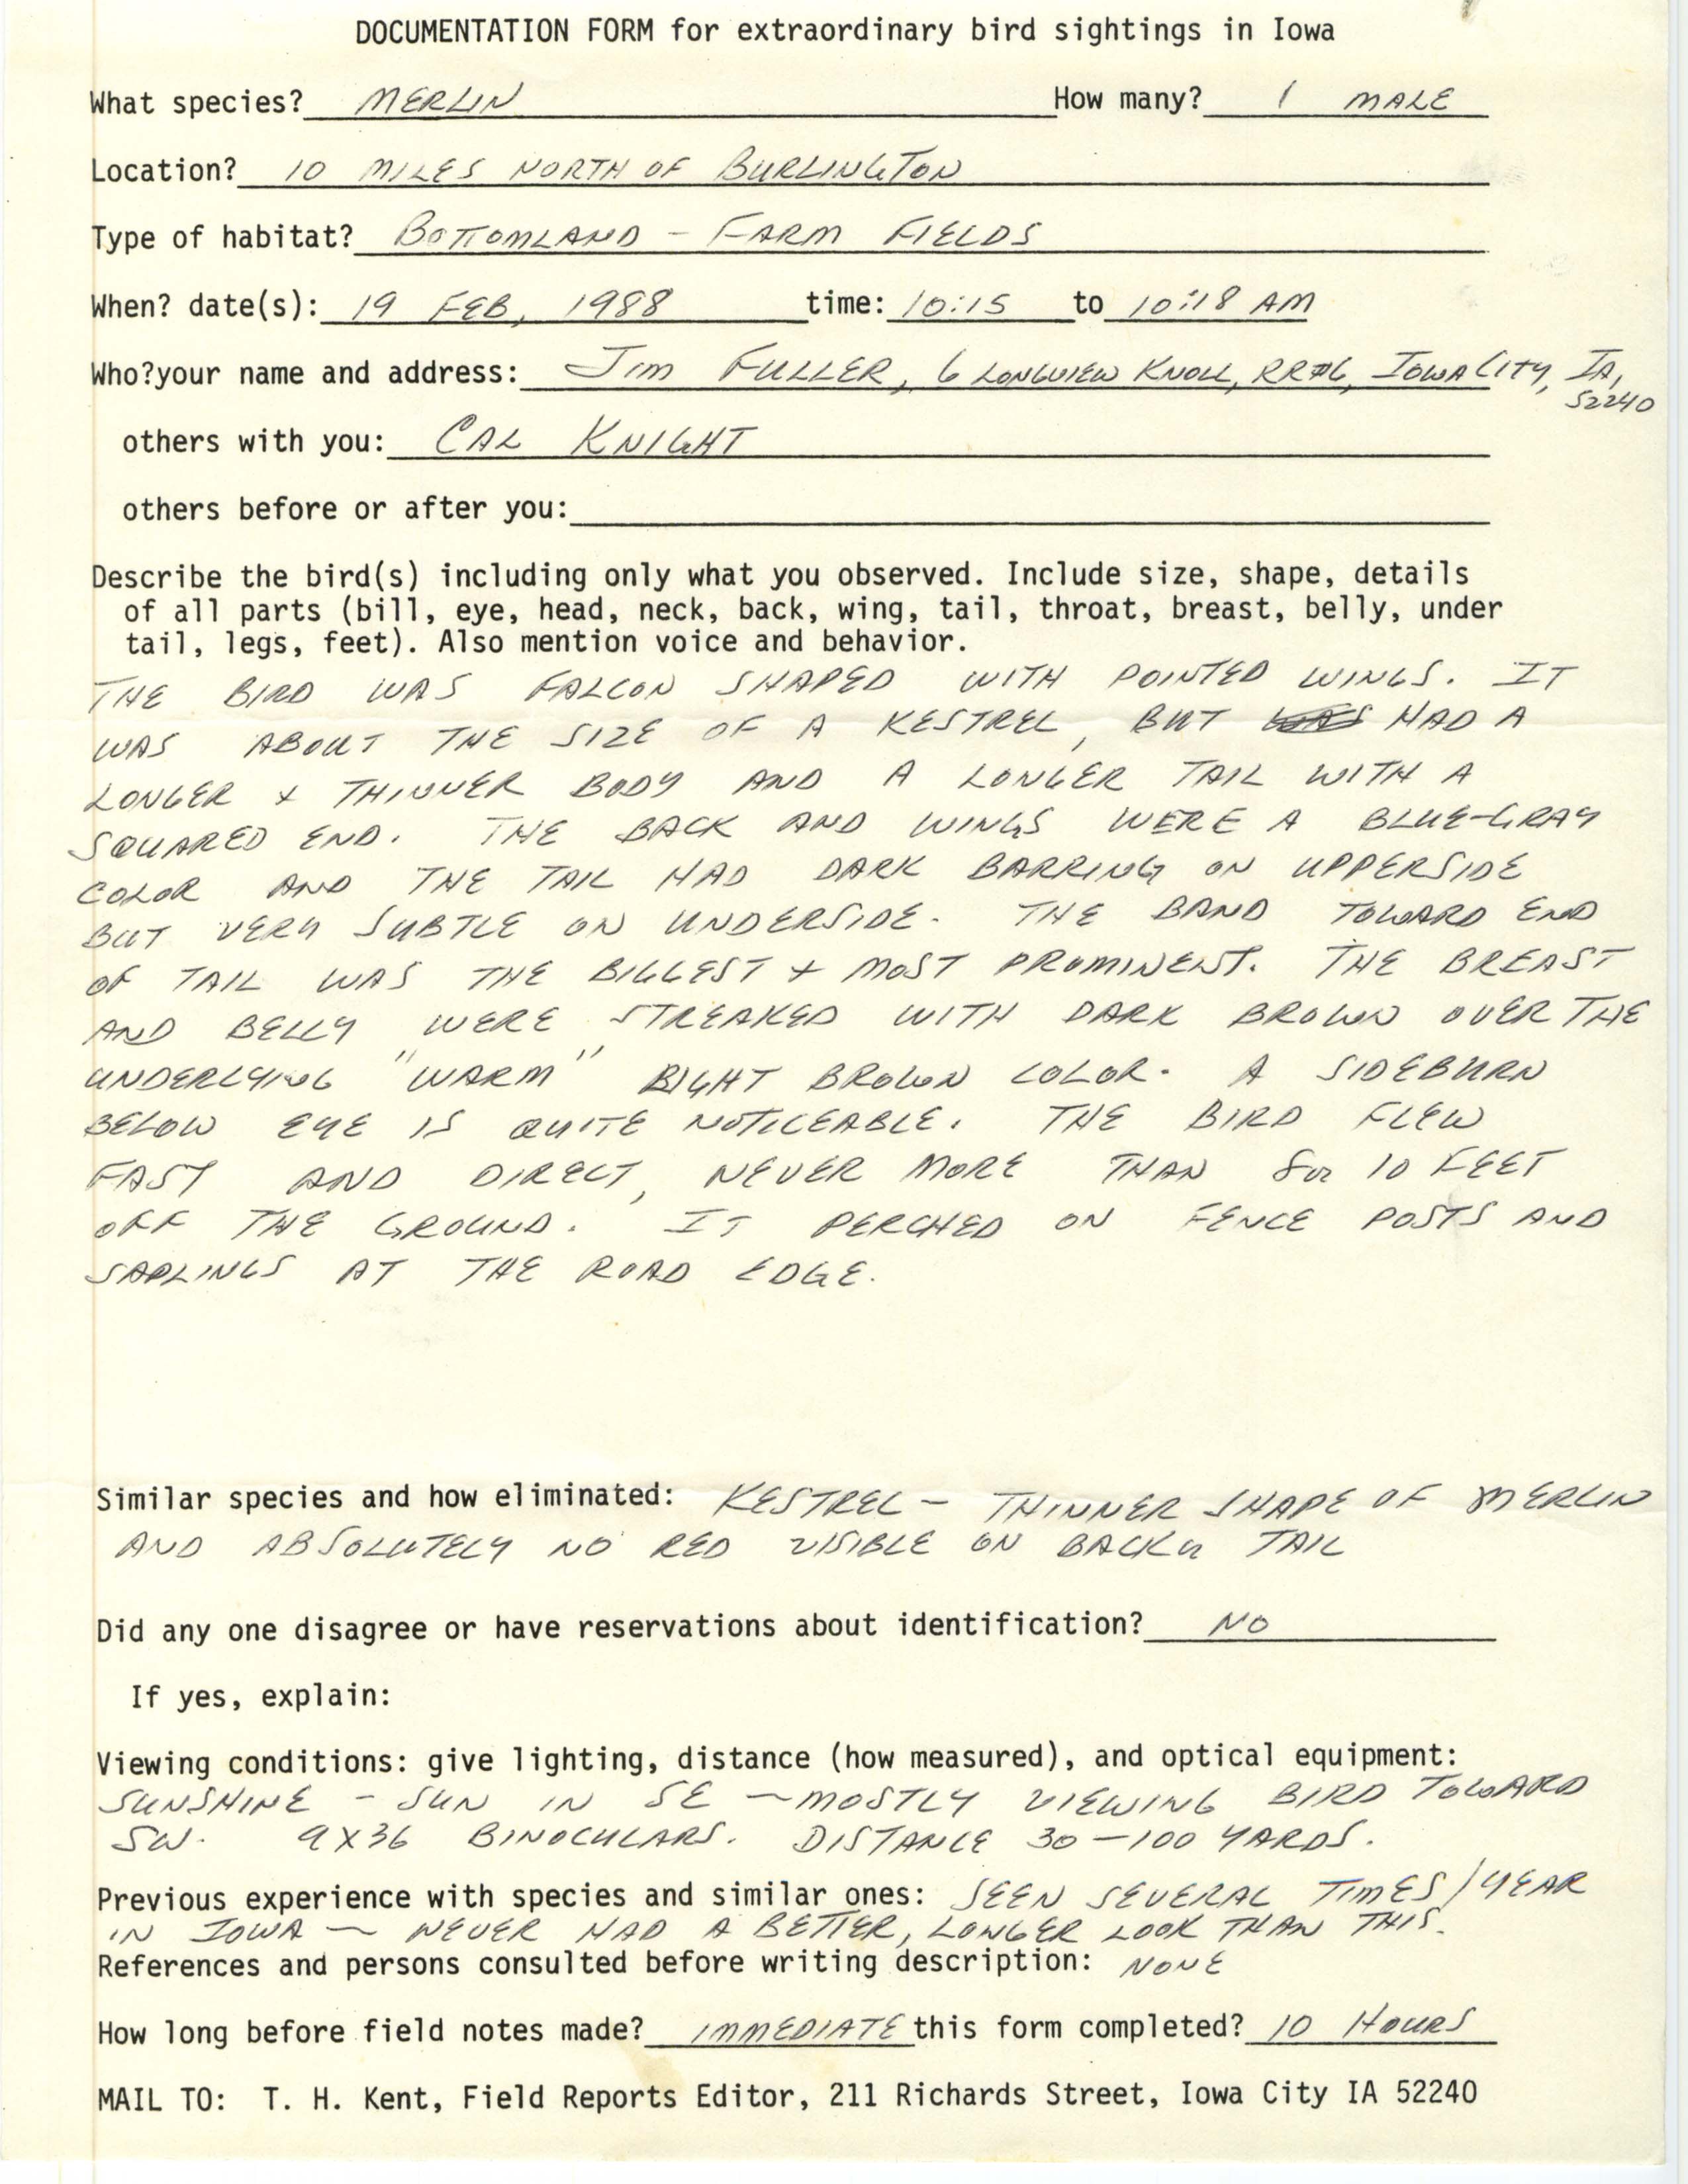 Rare bird documentation form for Merlin north of Burlington, 1988